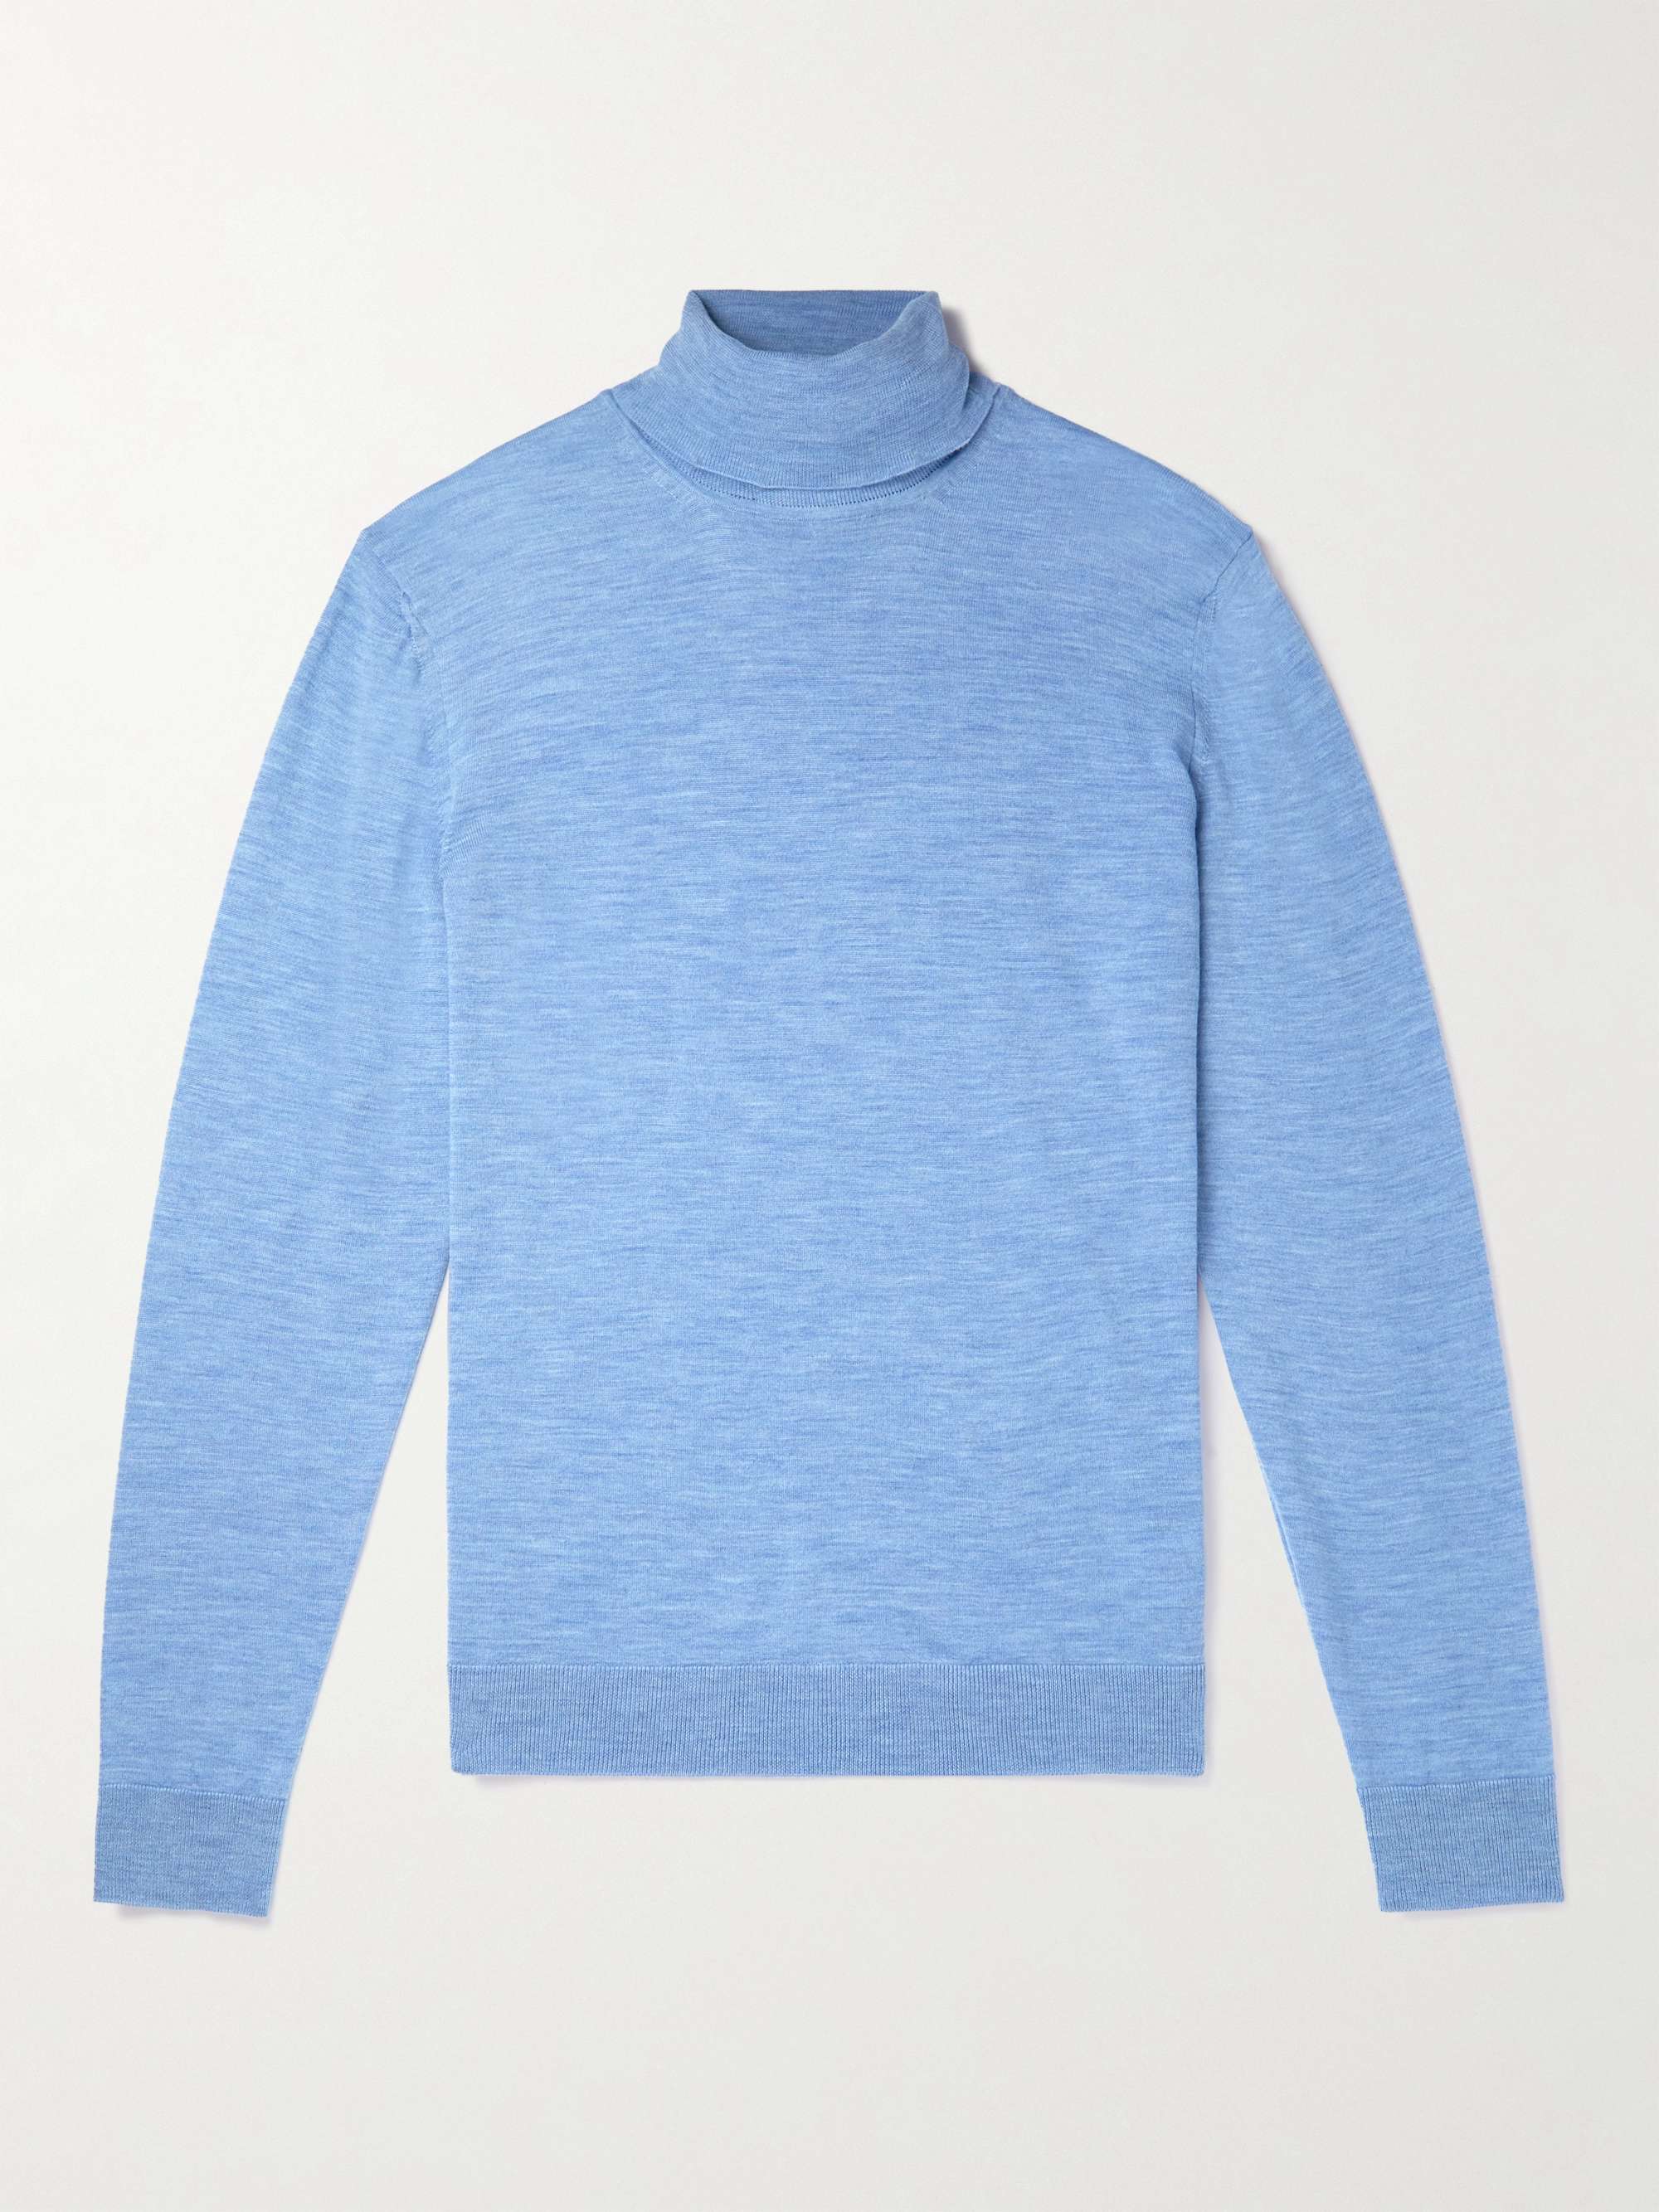 MR P. Slim-Fit Merino Wool Rollneck Sweater